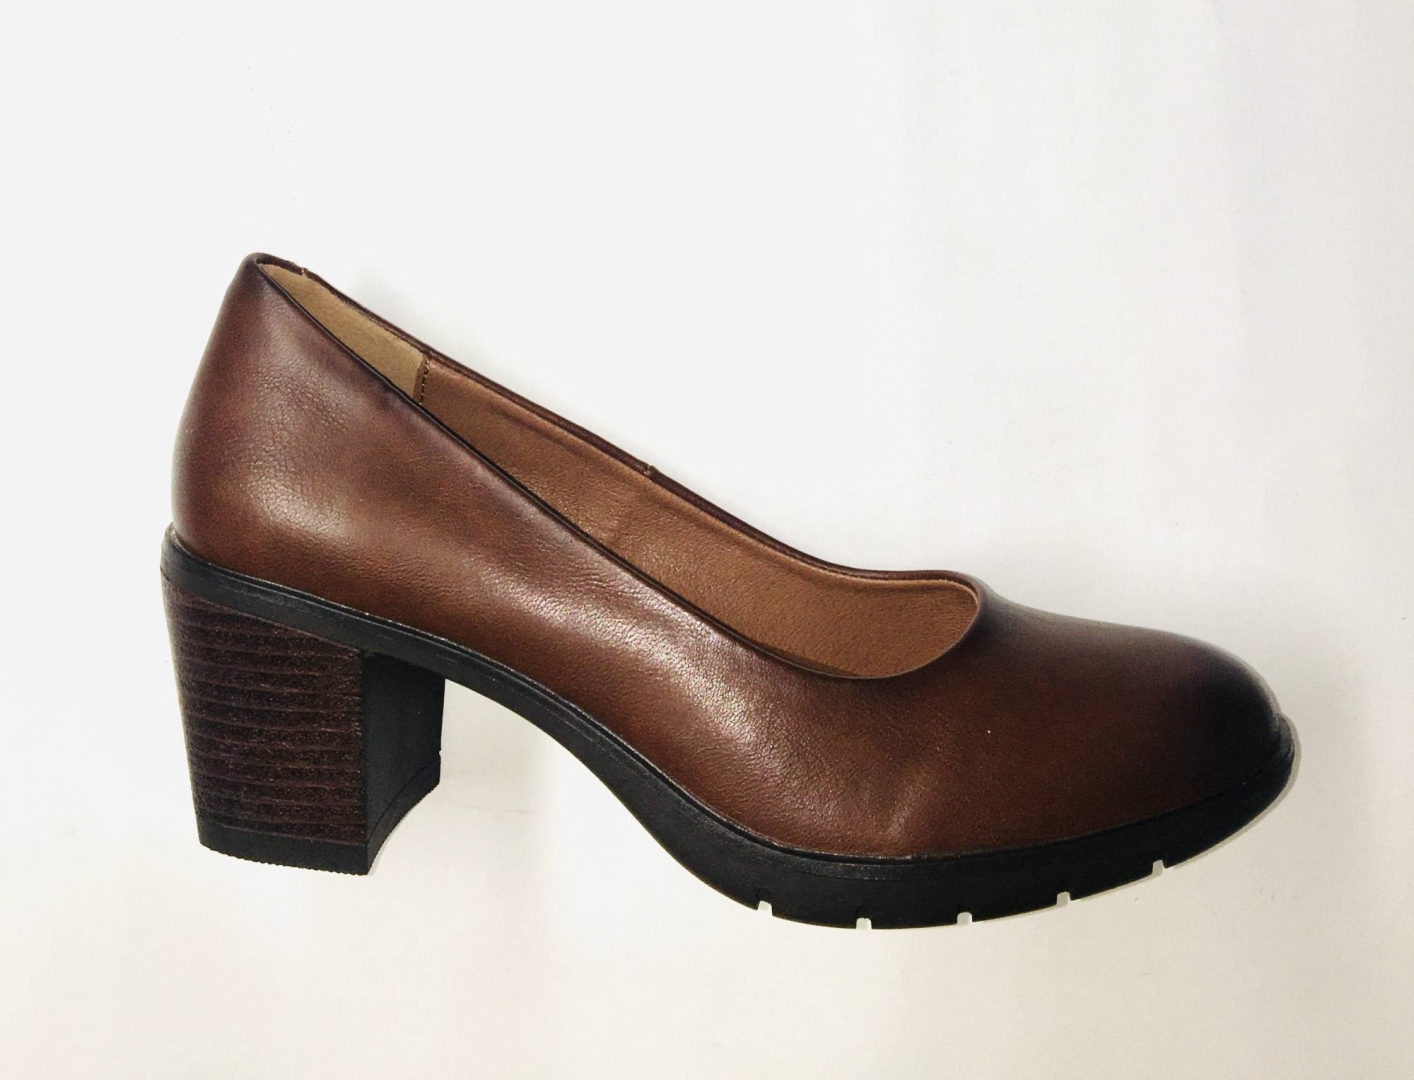 Zapato mujer tipo salón en marrón de CALZAPIES 1423005. M-197